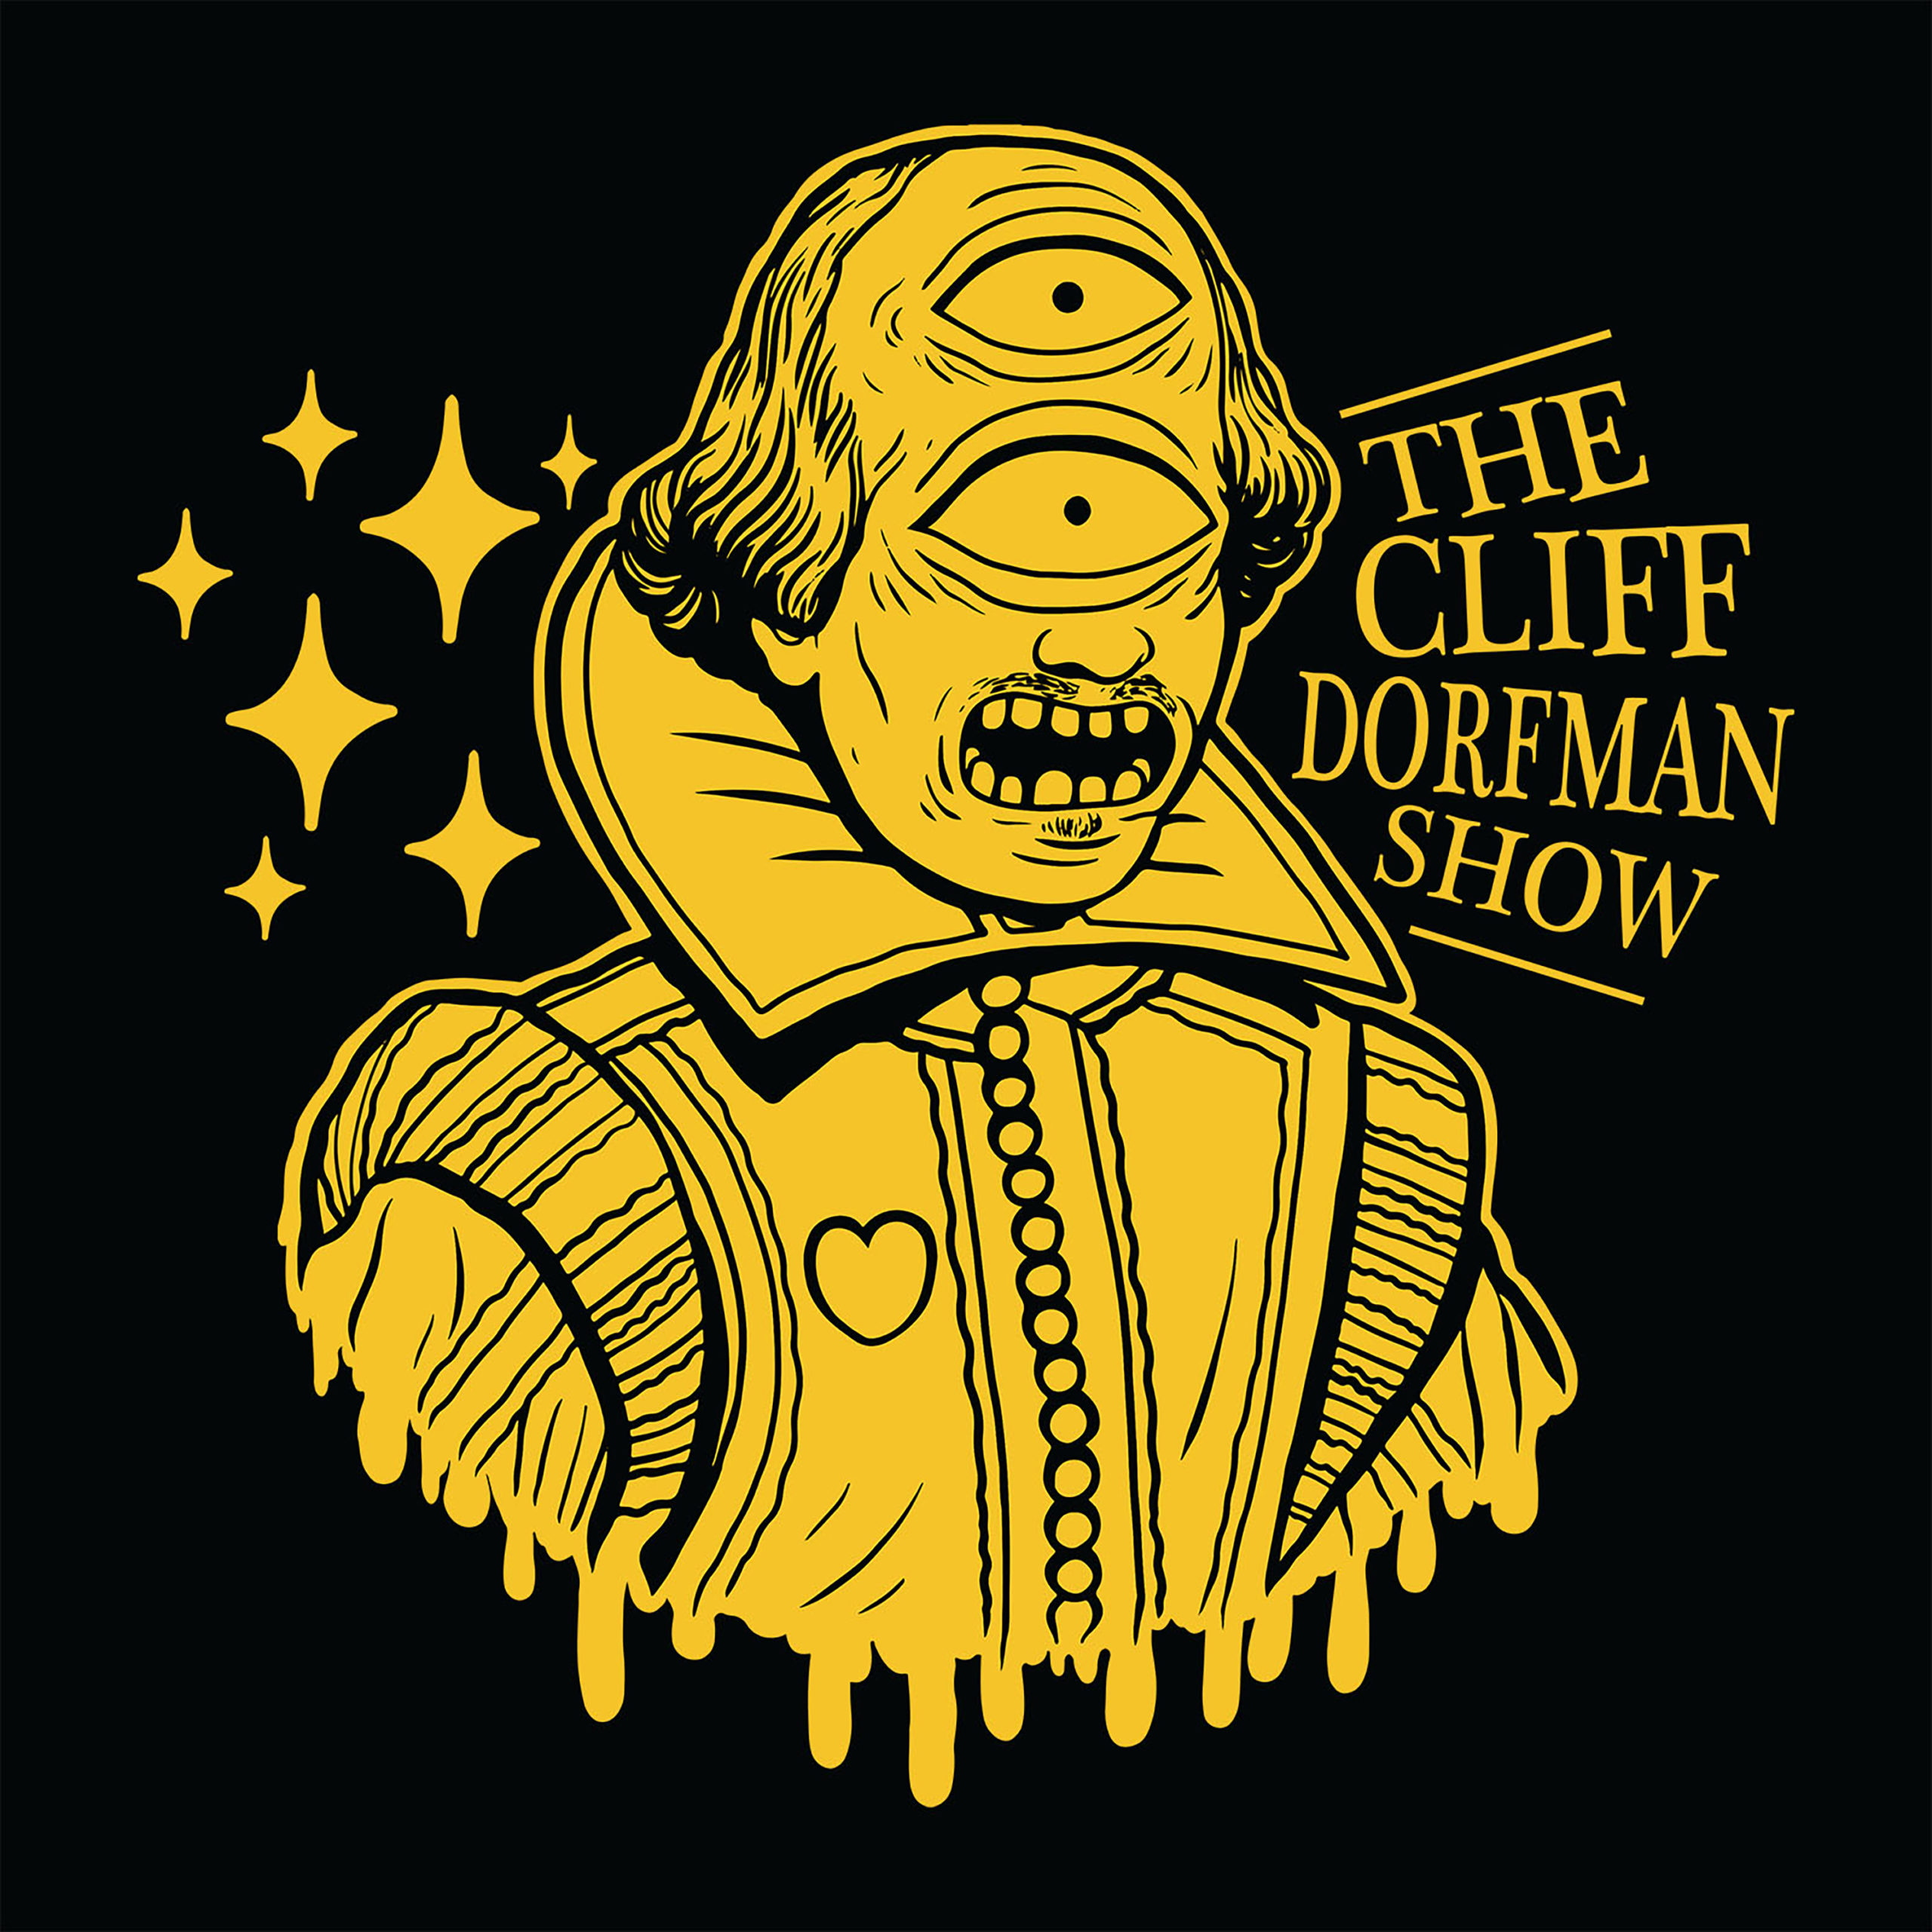 The Cliff Dorfman Show Podcast Cover - Square